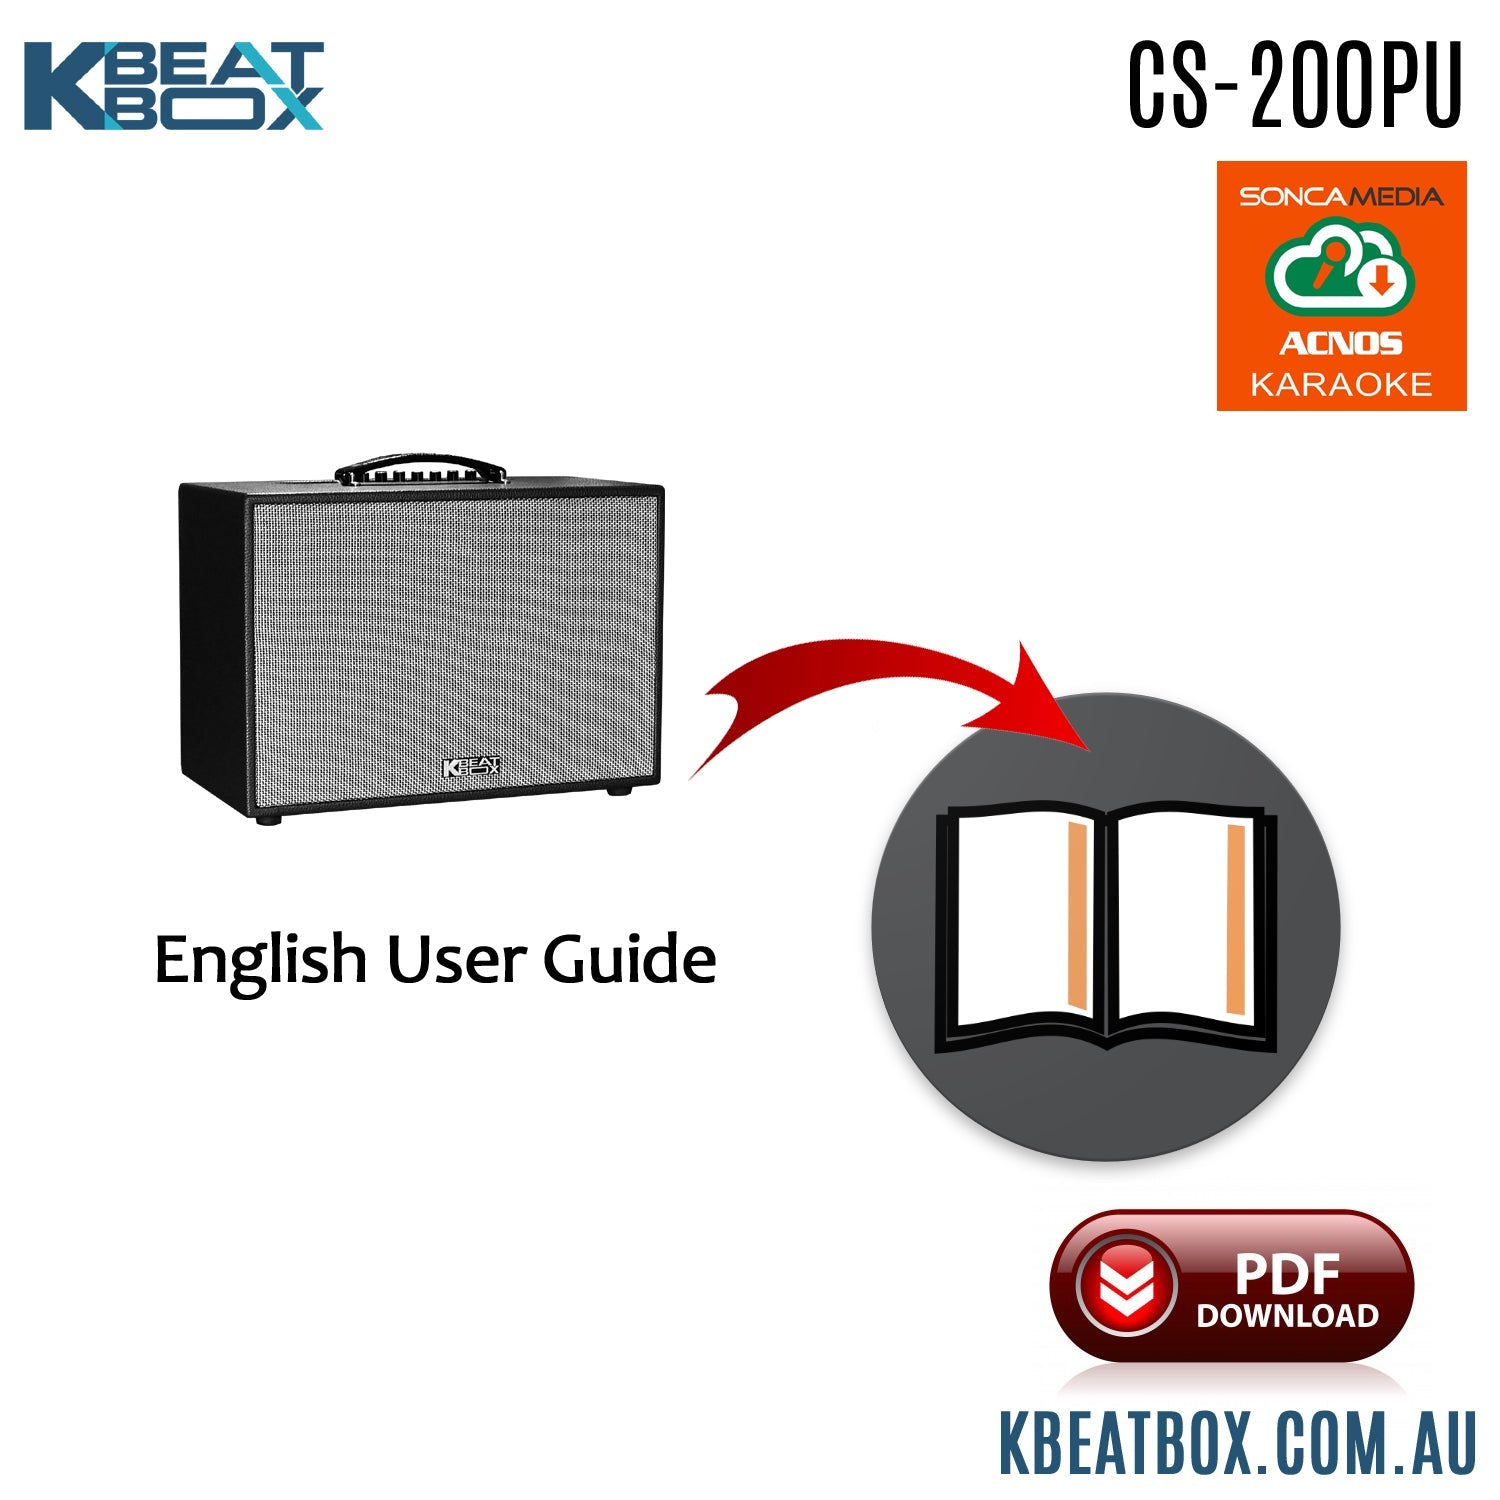 How To Connect Guide - KBeatBox CS-200PU - Karaoke Home Entertainment